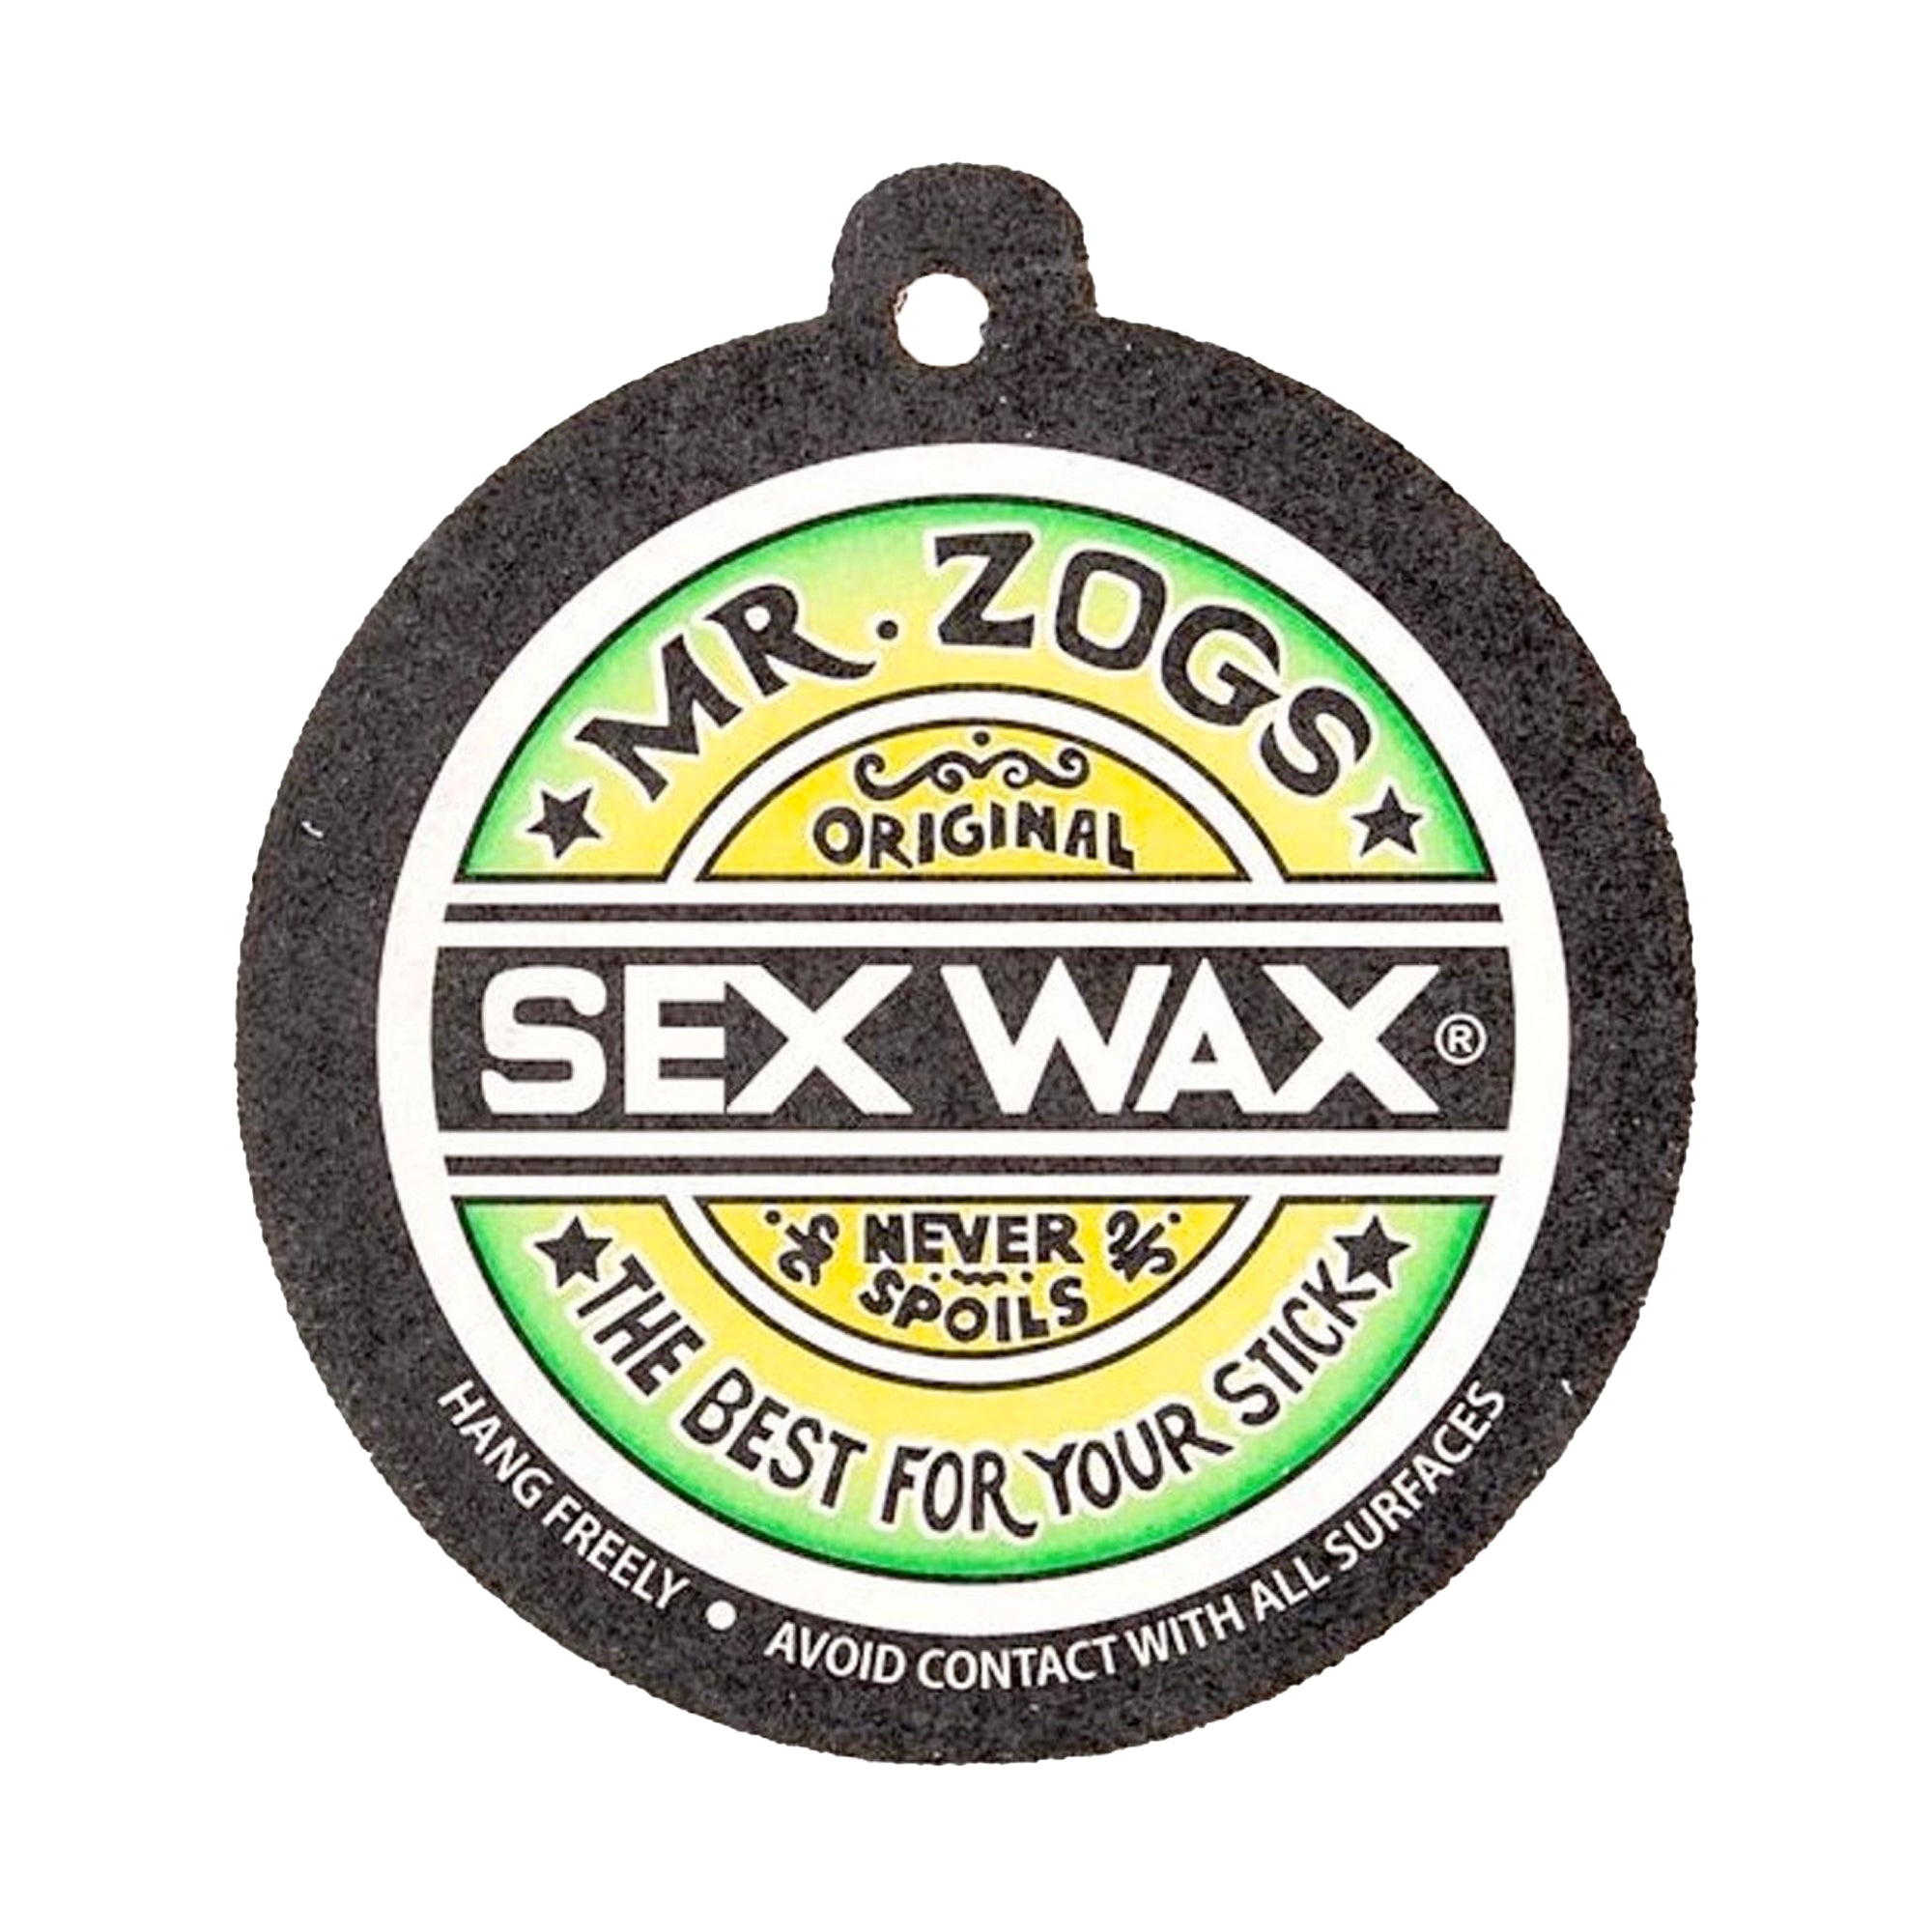 Sexwax Car Freshener - Coconut Scent - Inverted Bodyboarding